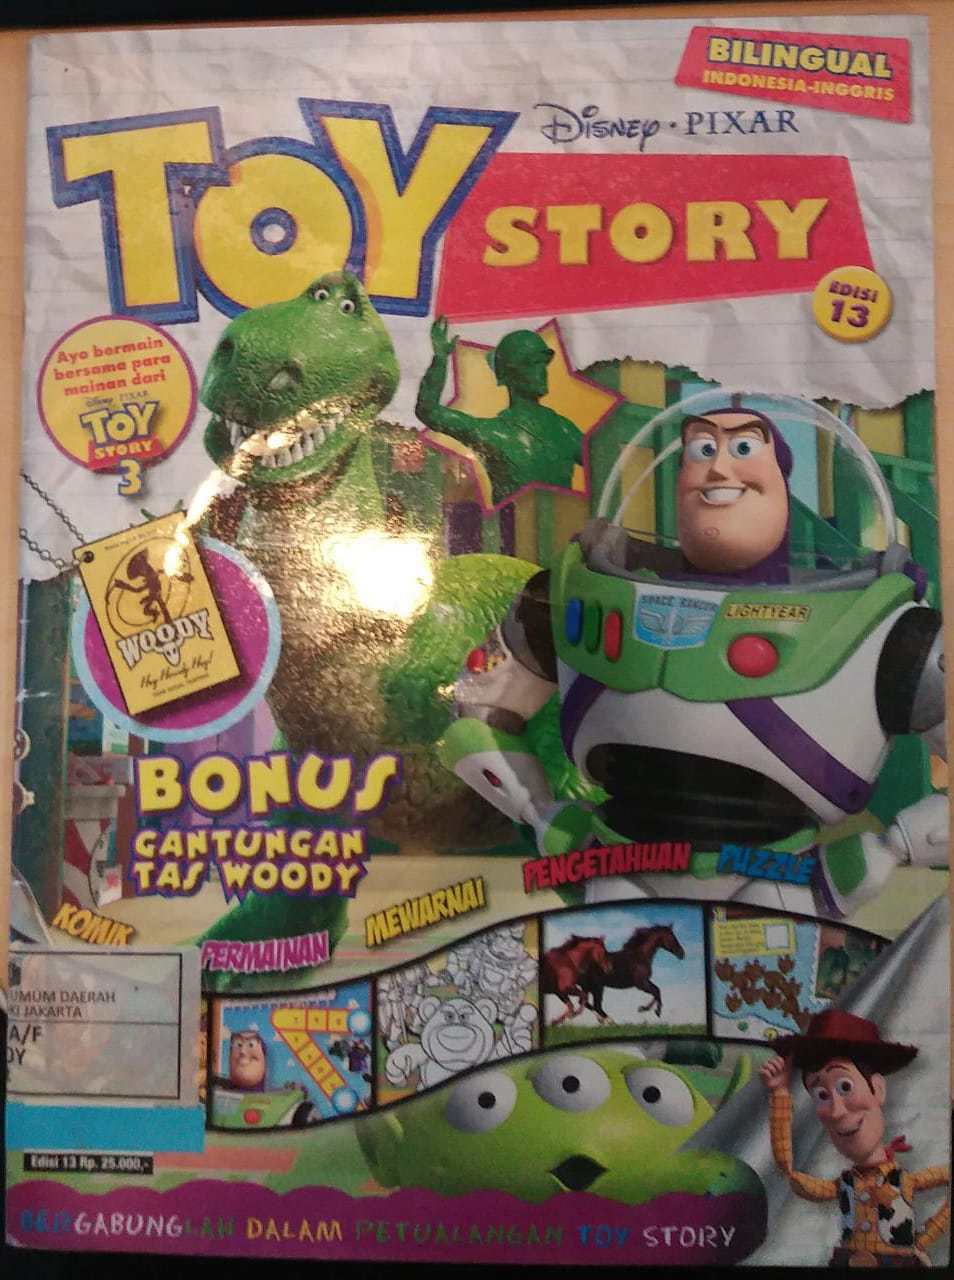 Toy Story : bilingual Indonesia - inggris Ed.13